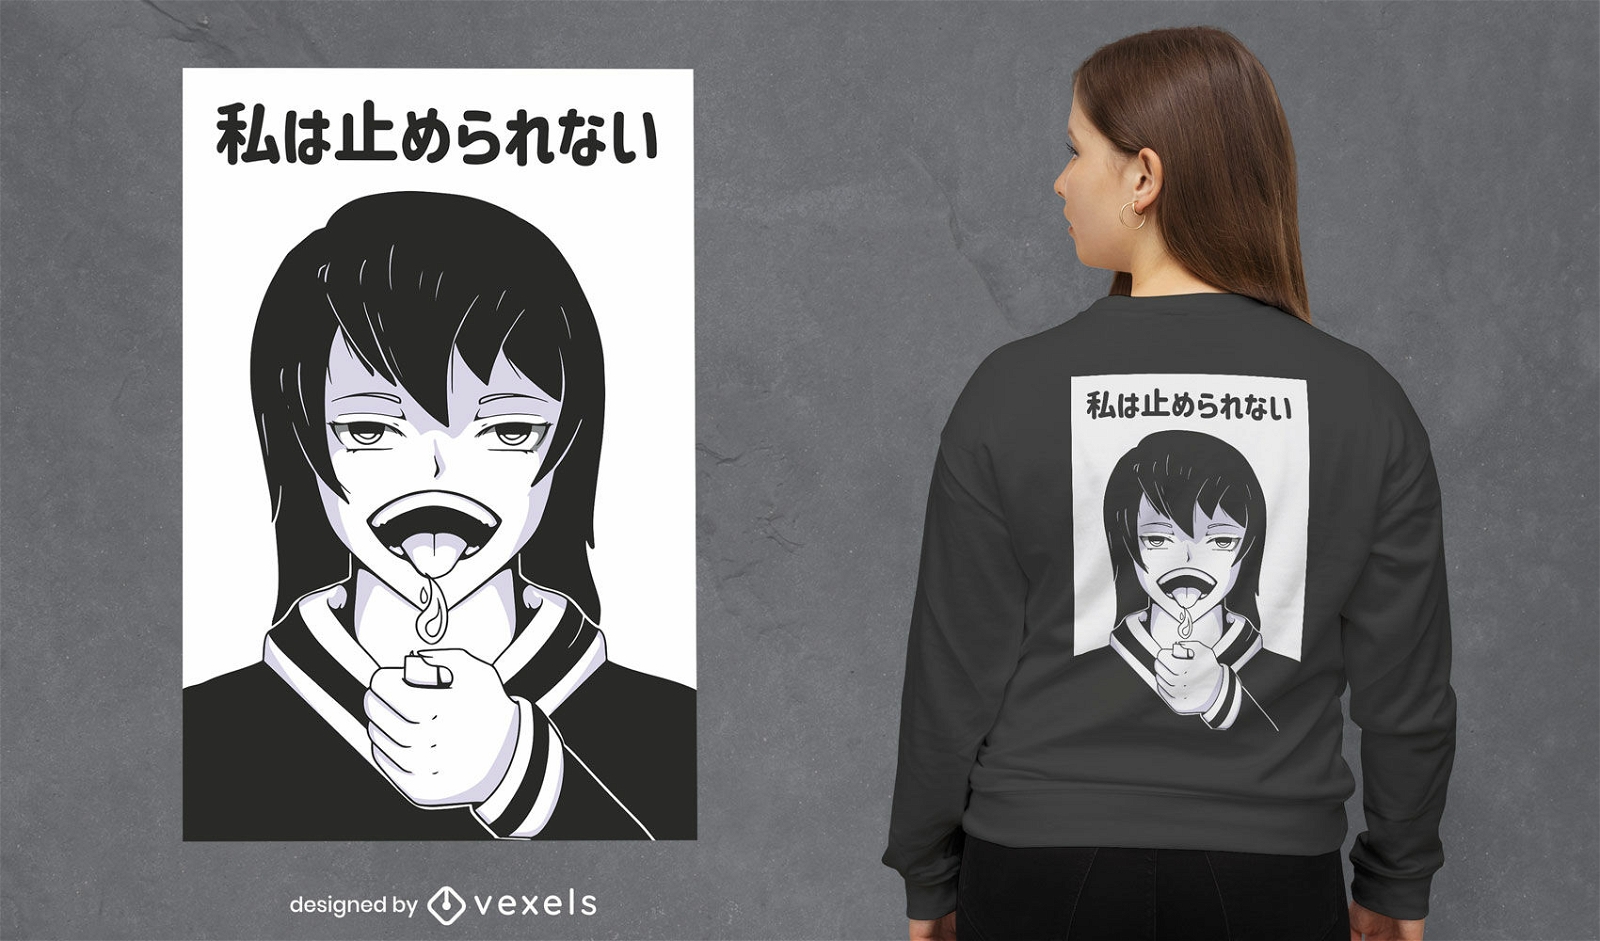 Awesome anime girl t-shirt design